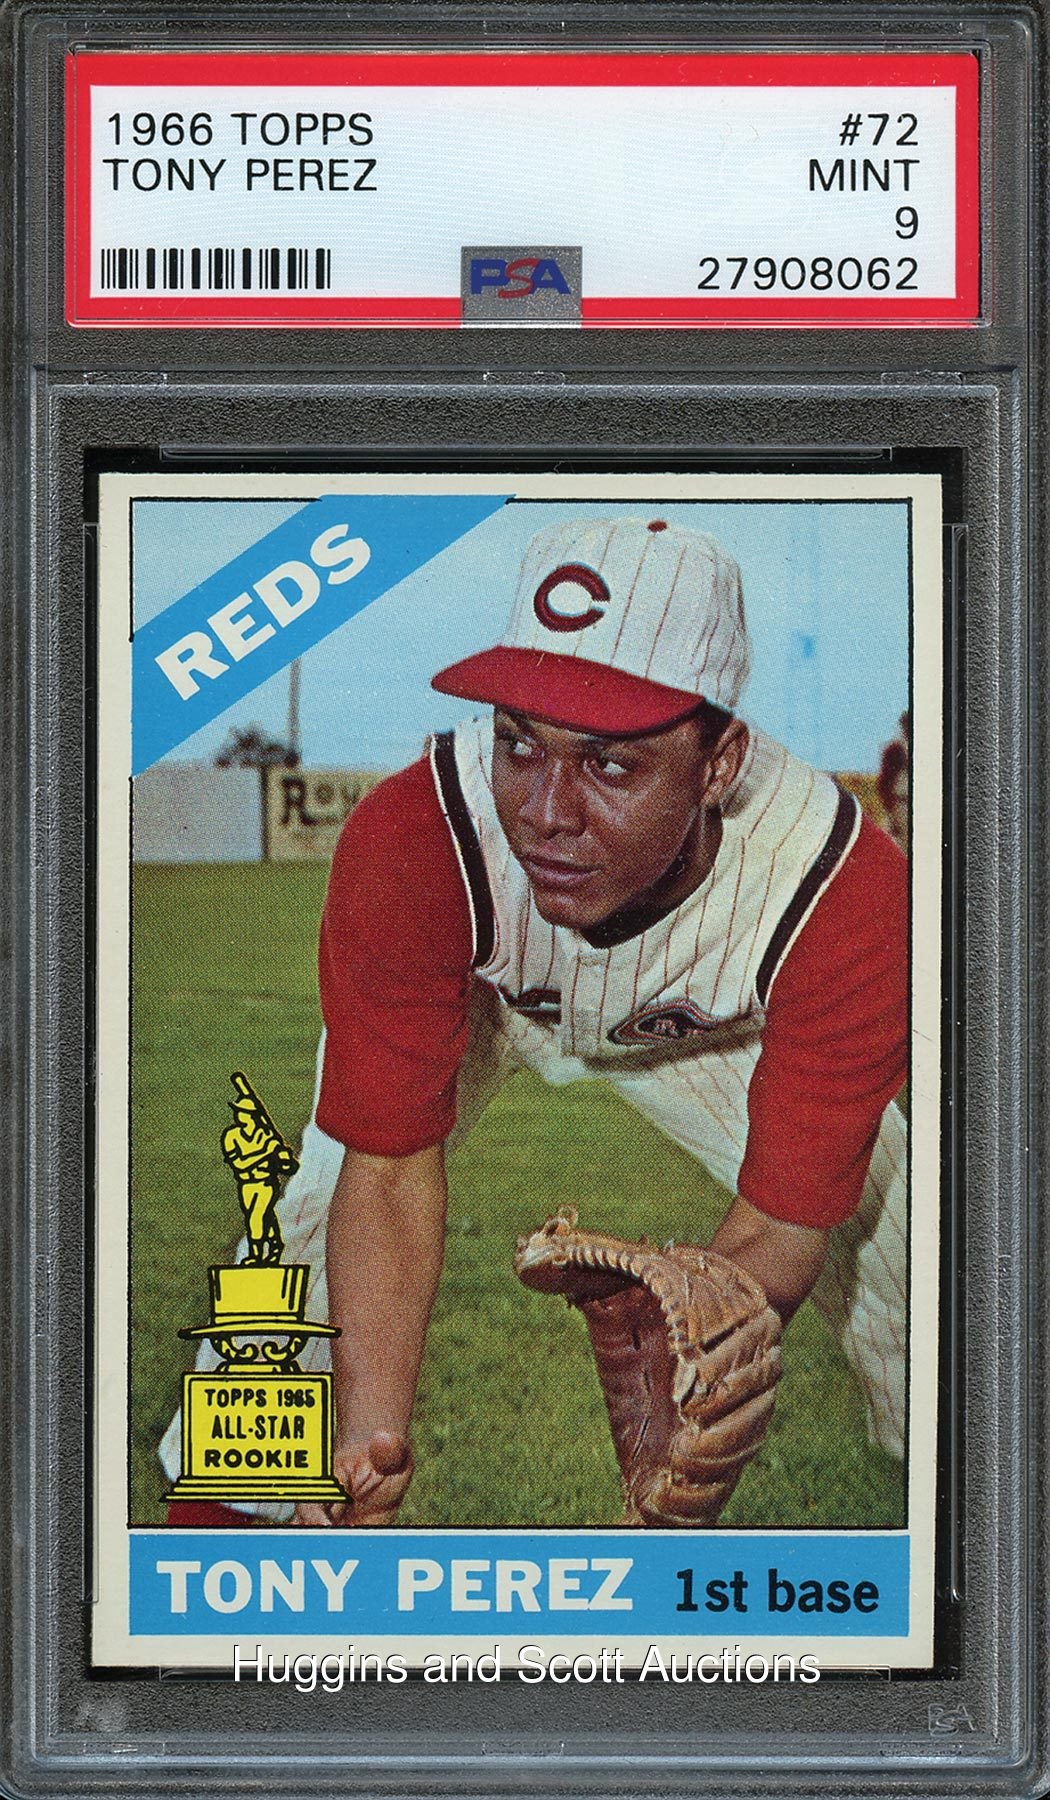 1966 Topps Baseball #72 Tony Perez - PSA Mint 9 - NONE BETTER!